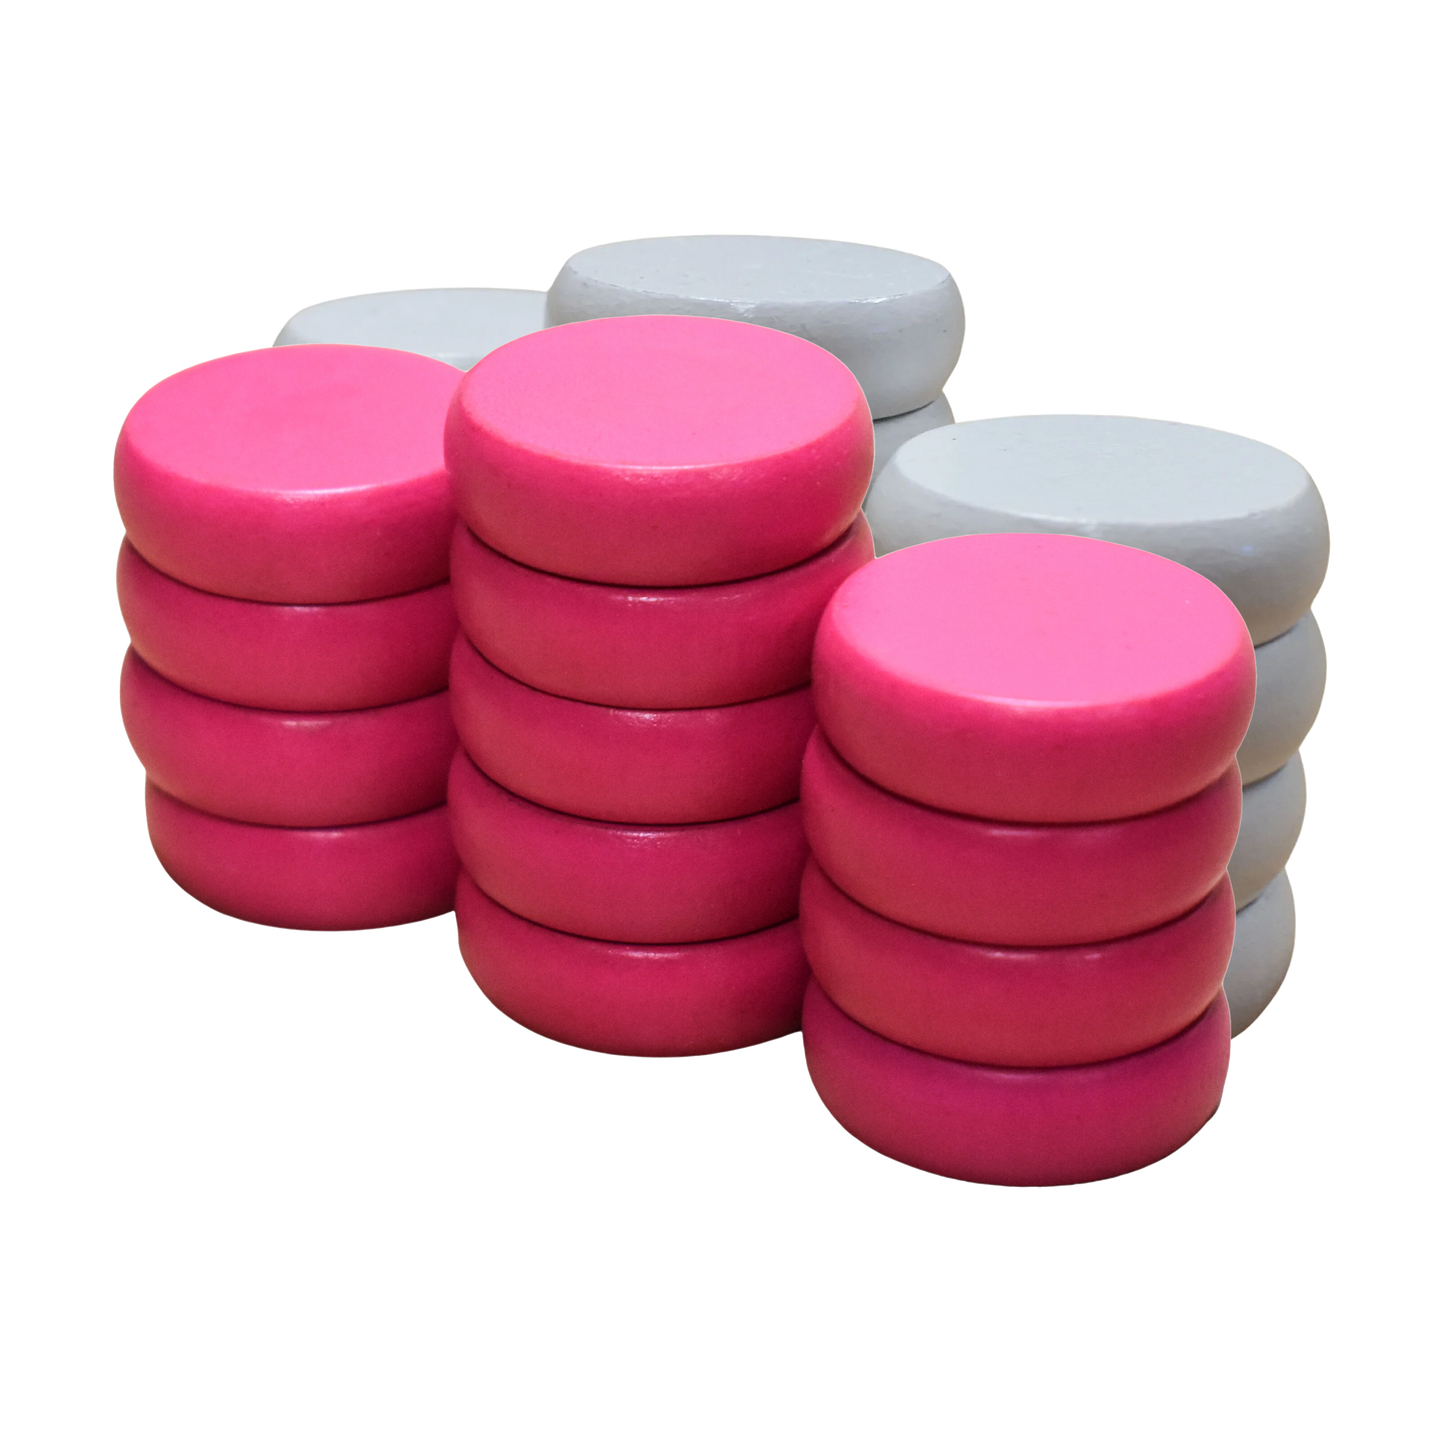 26 Crokinole Discs (White & Pink)